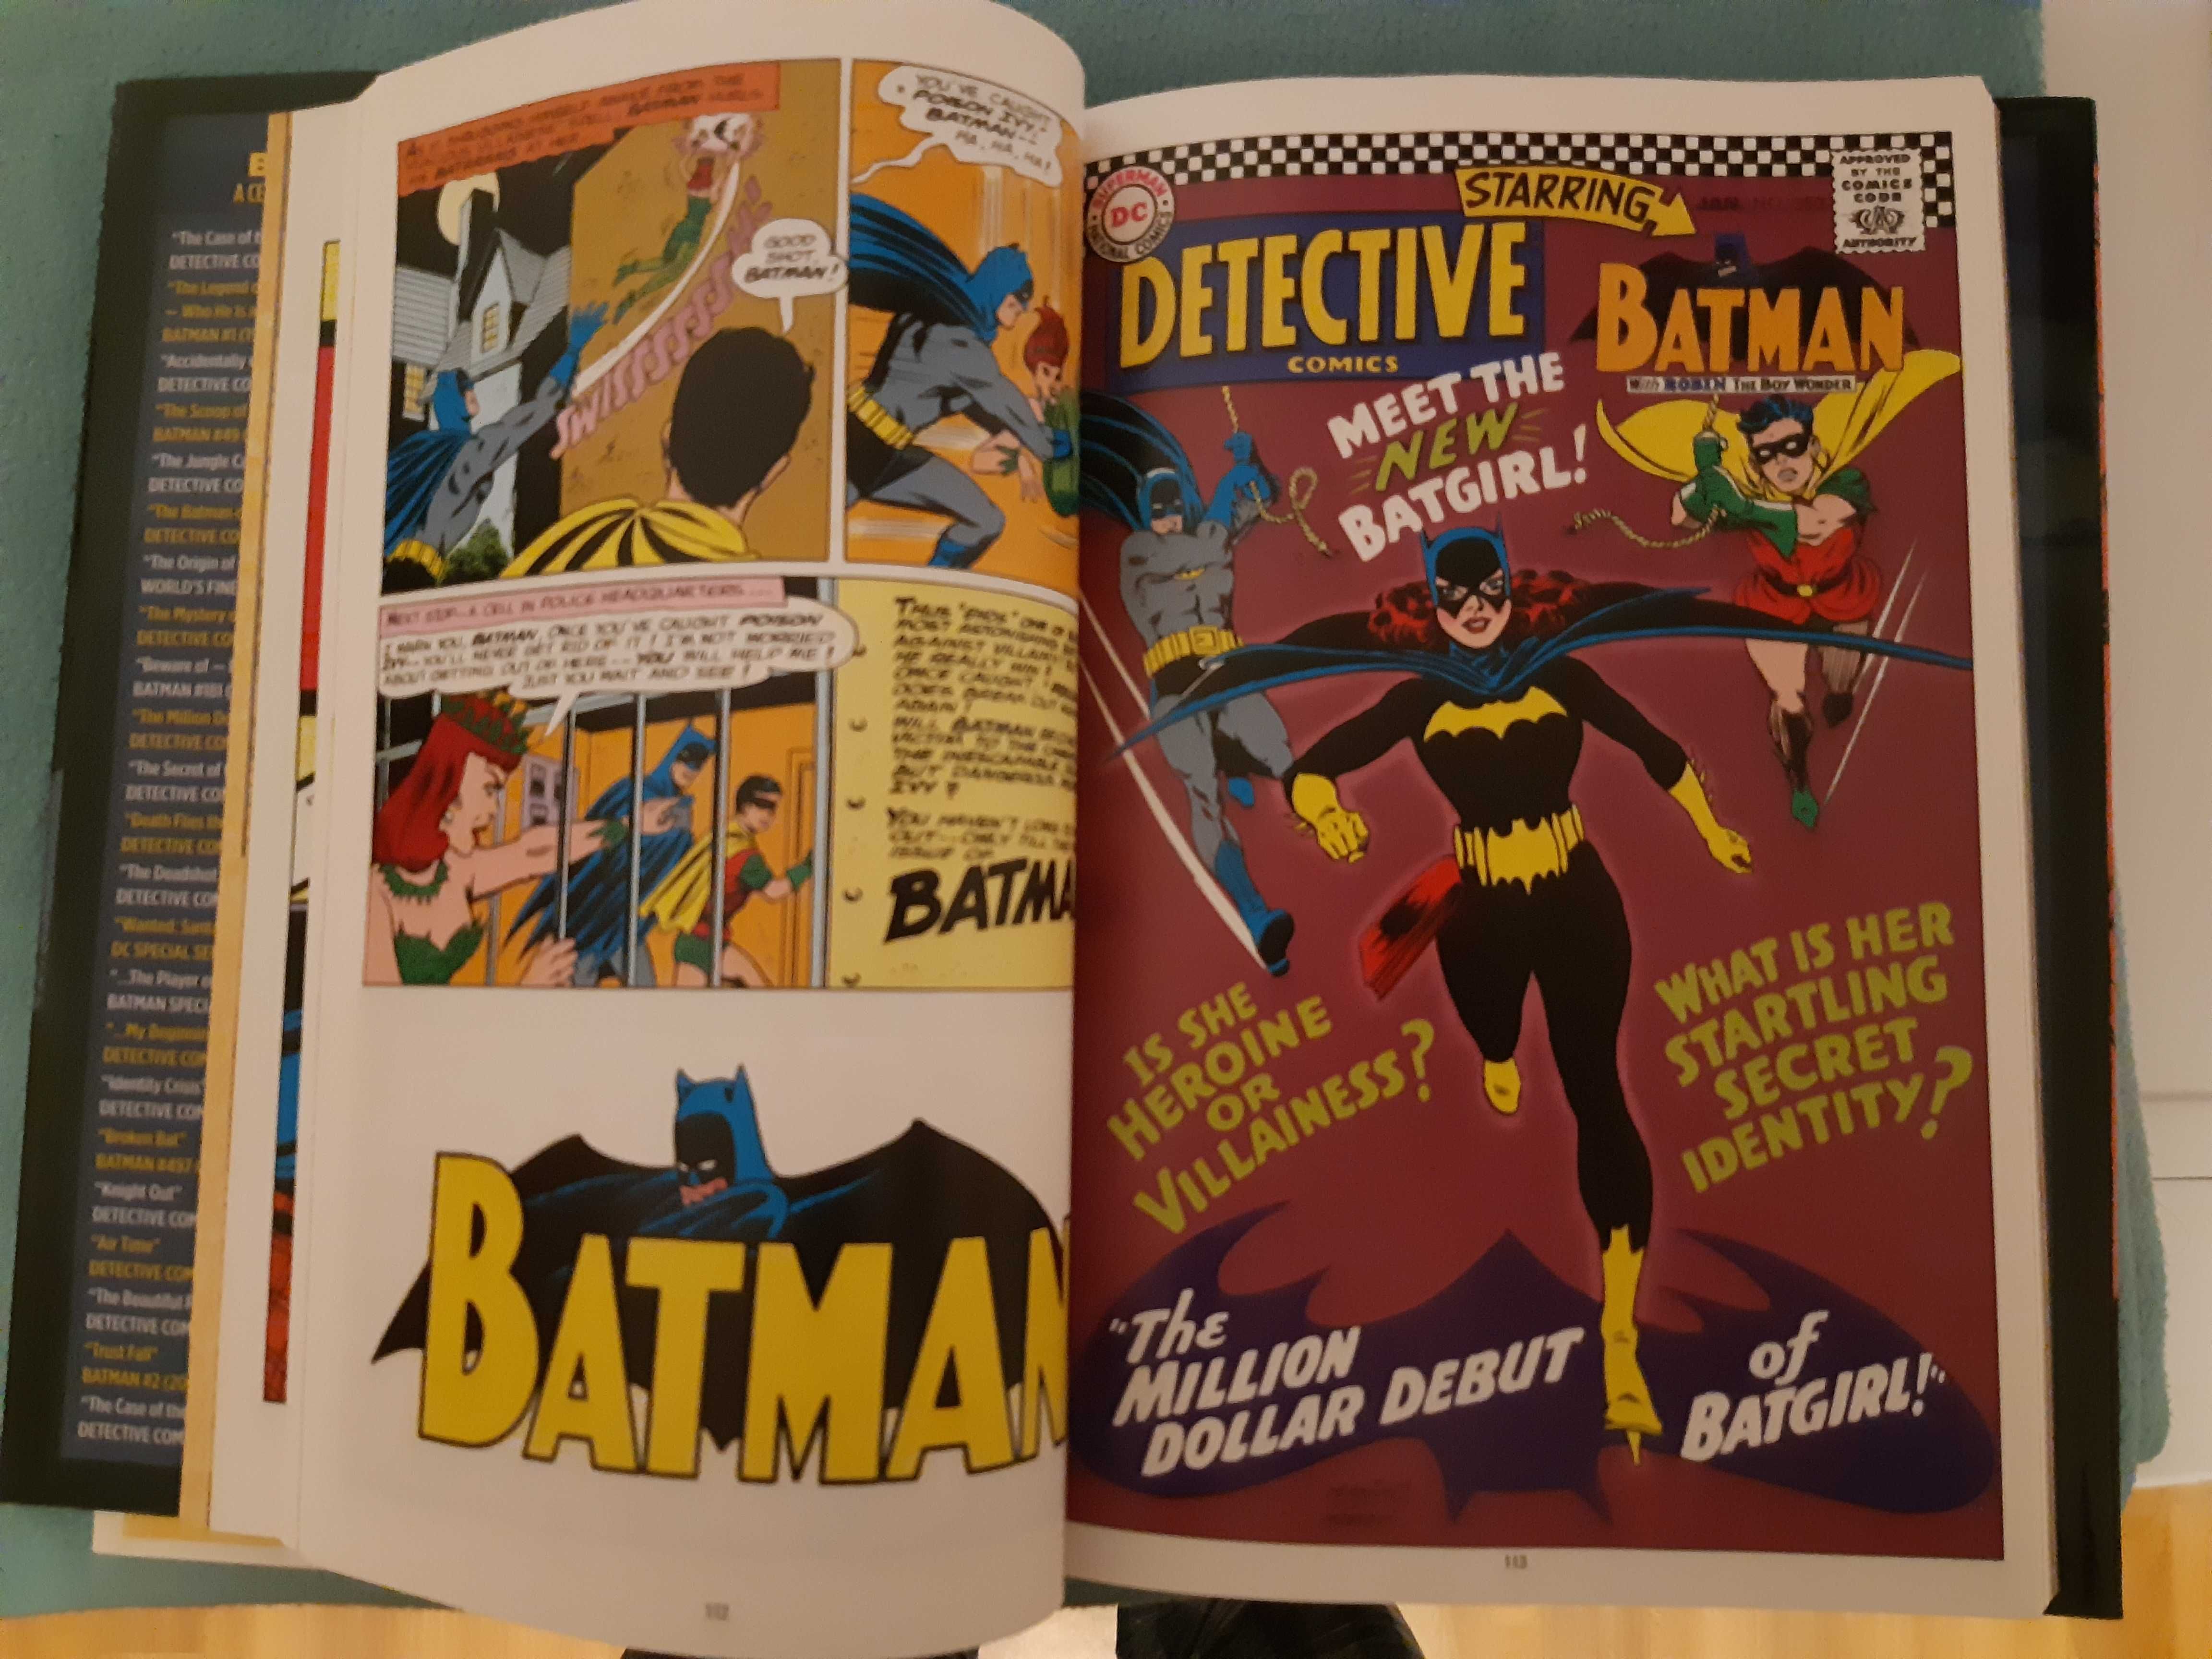 Batman: A Celebration of 75 Years